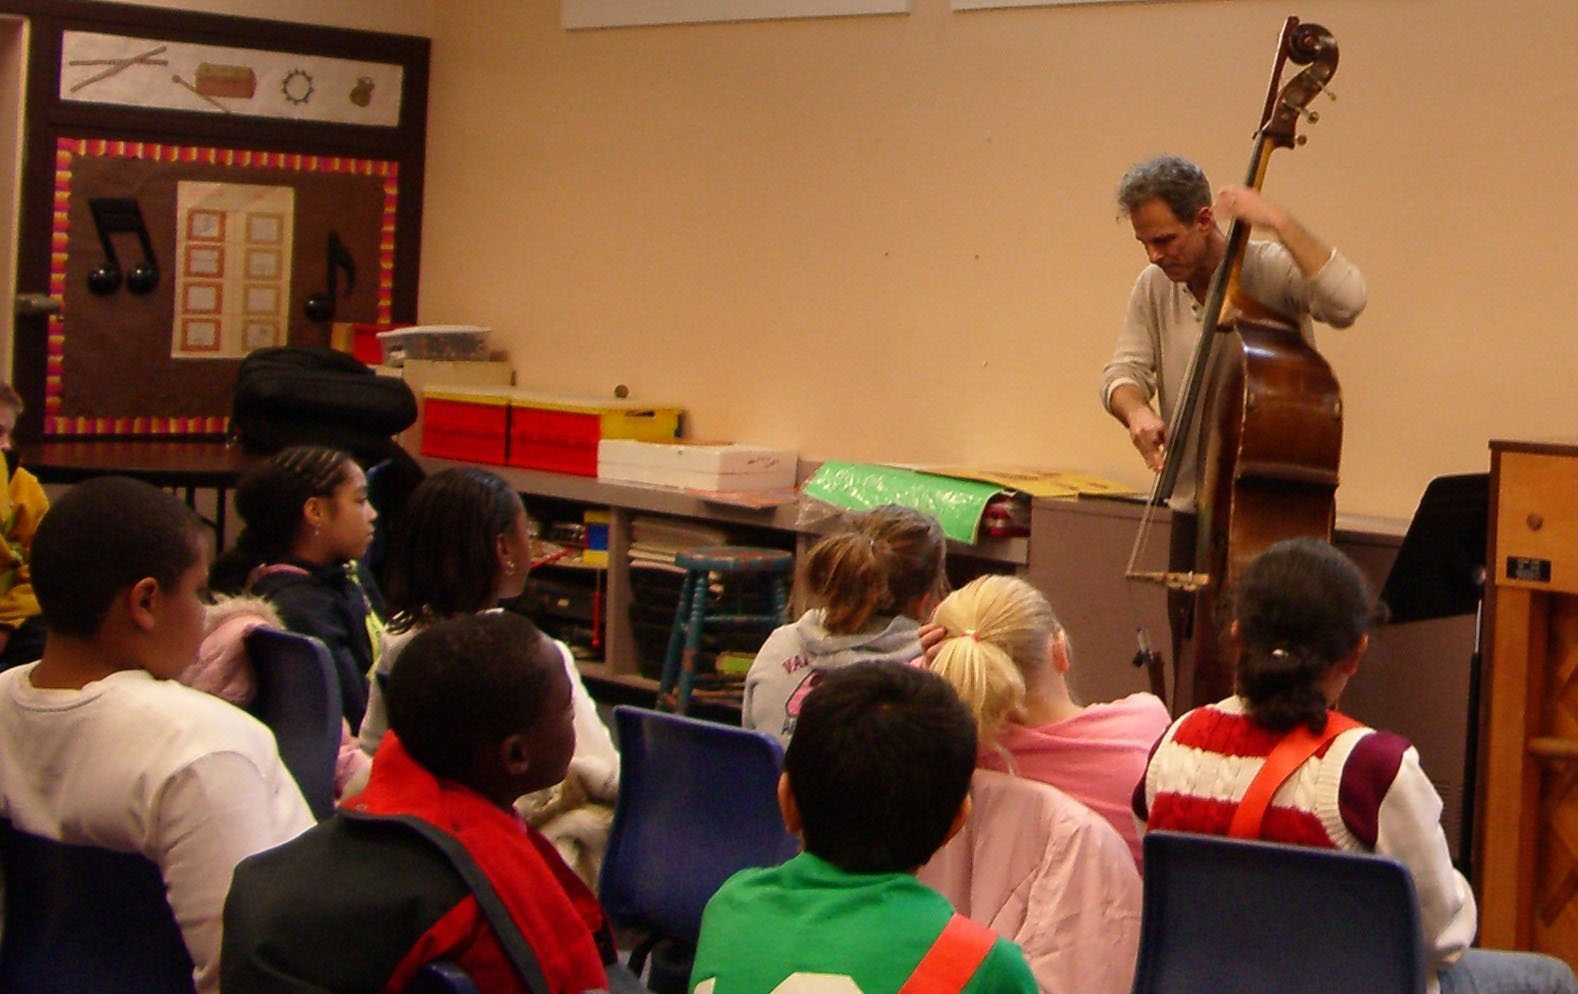 Students listen to a man play an upright bass